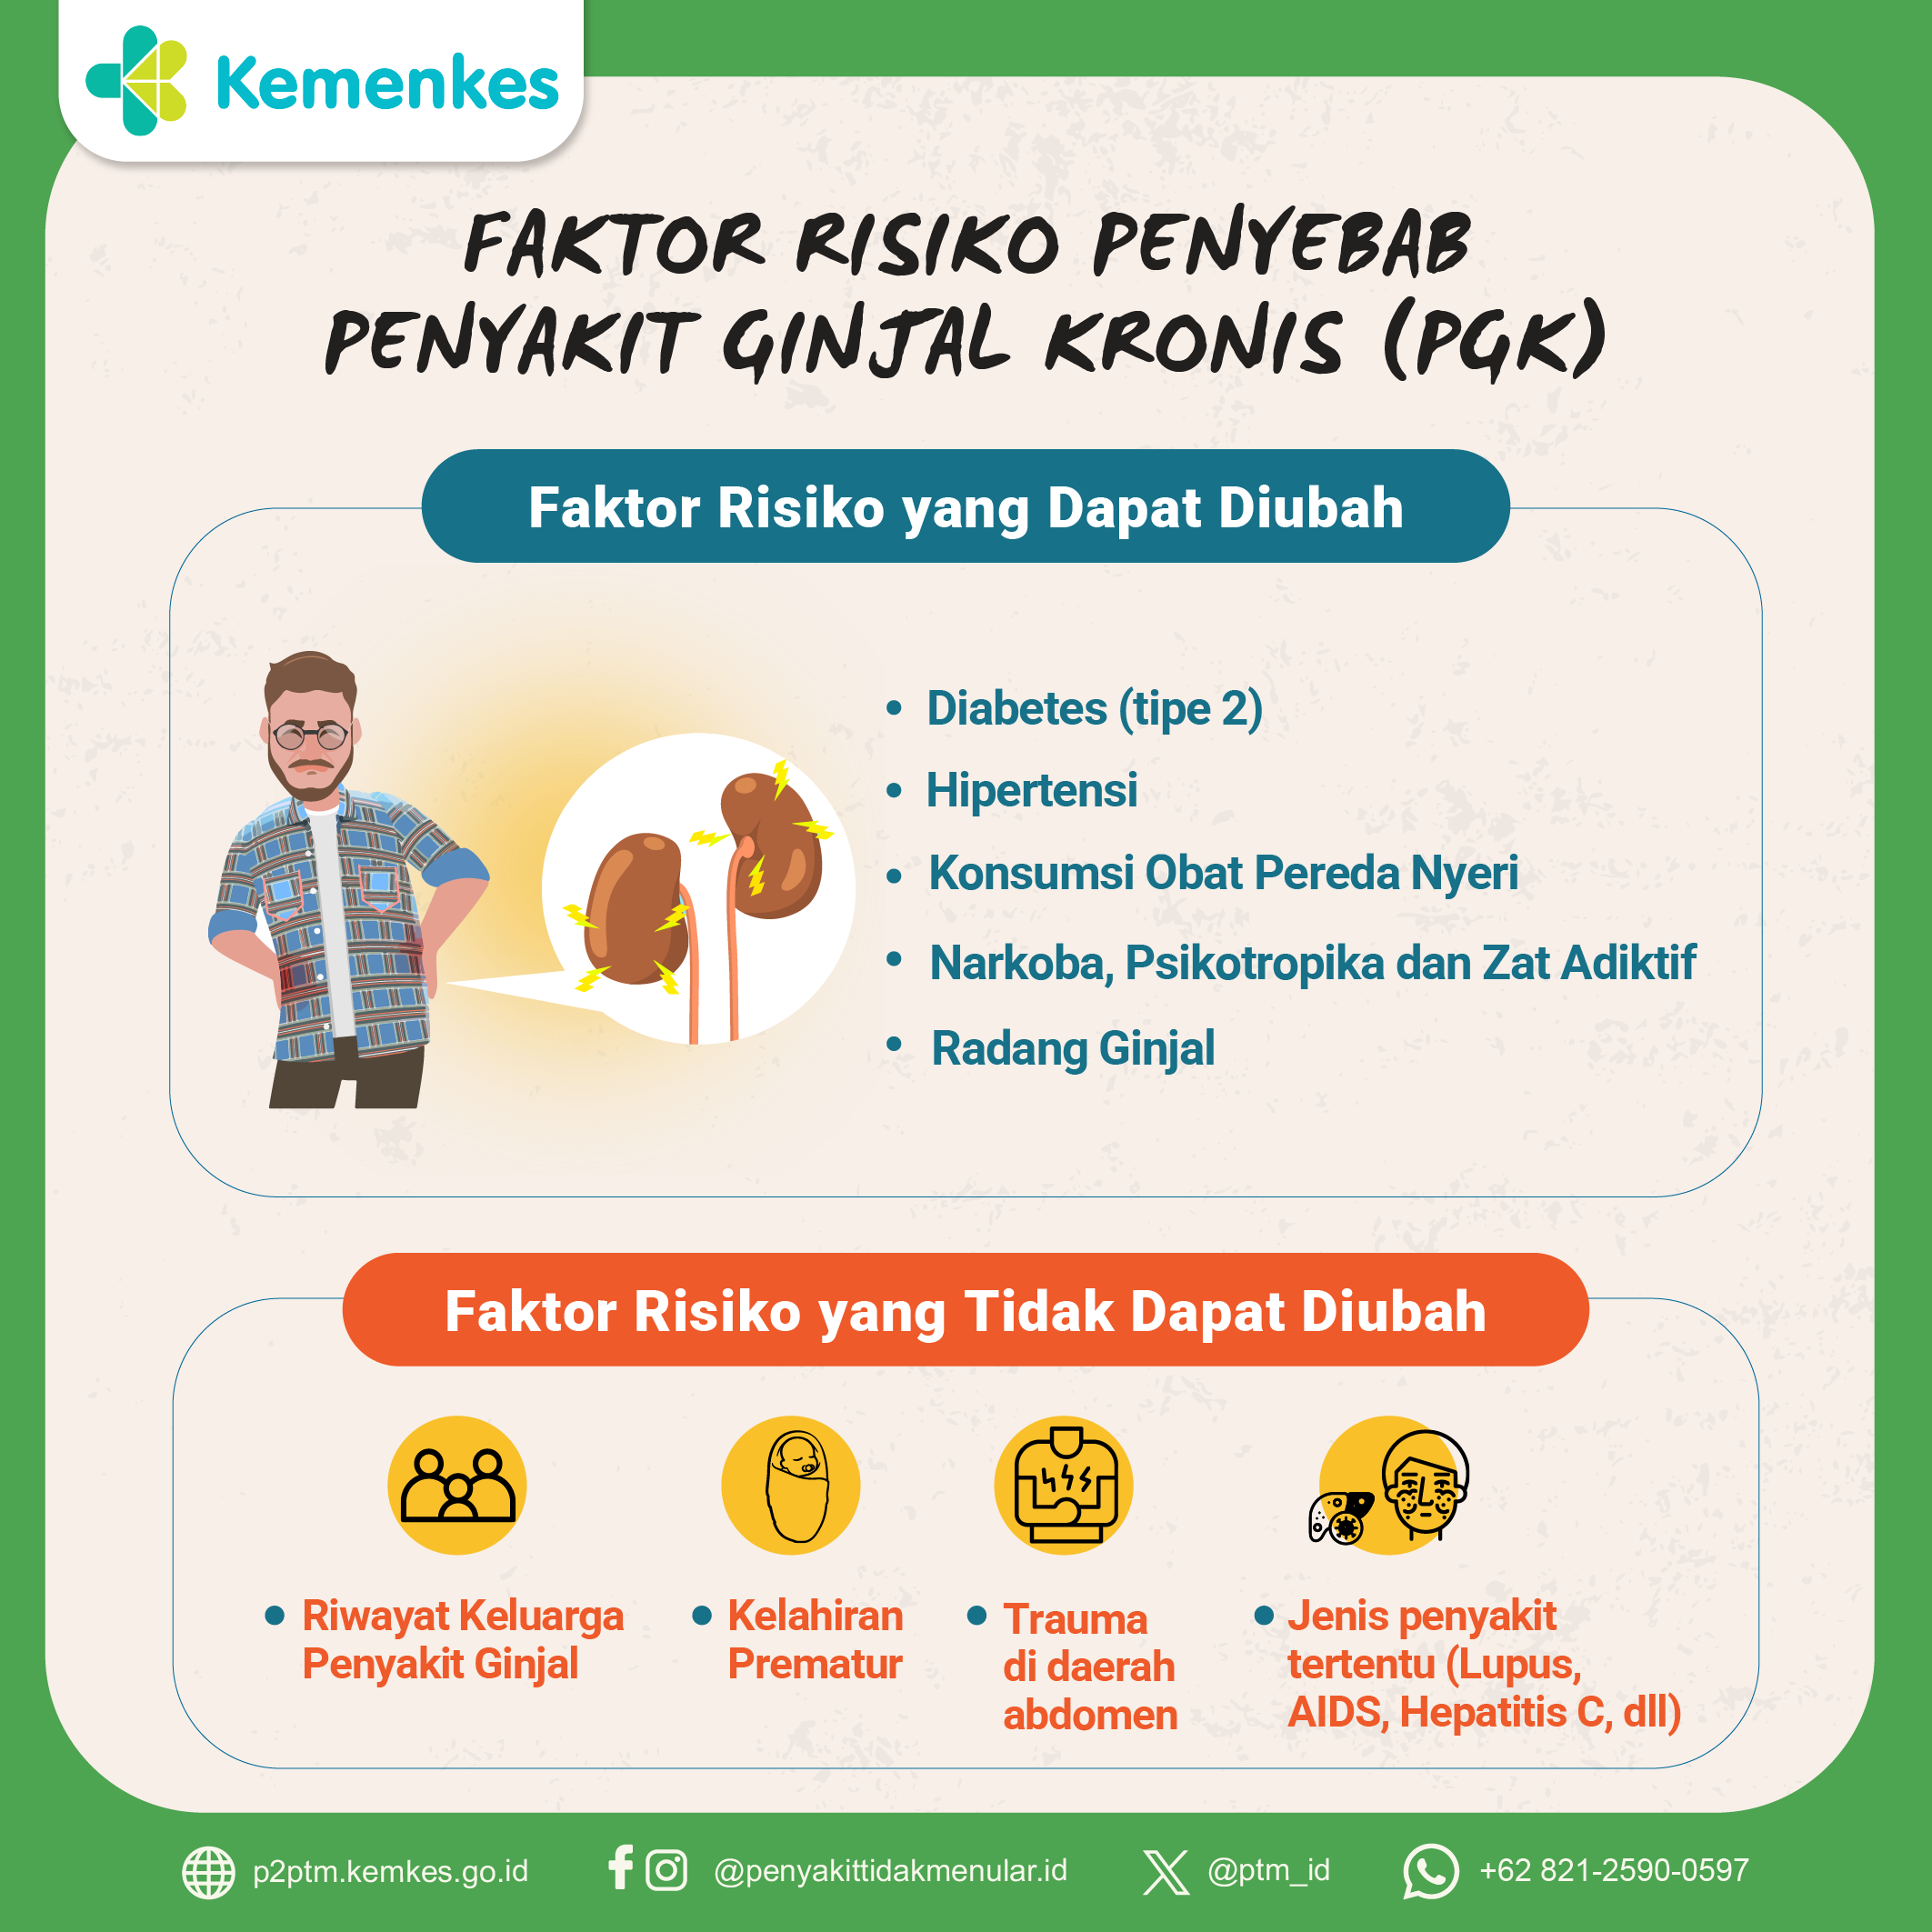 Faktor Risiko Penyebab Penyakit Ginjal Kronis/PGK